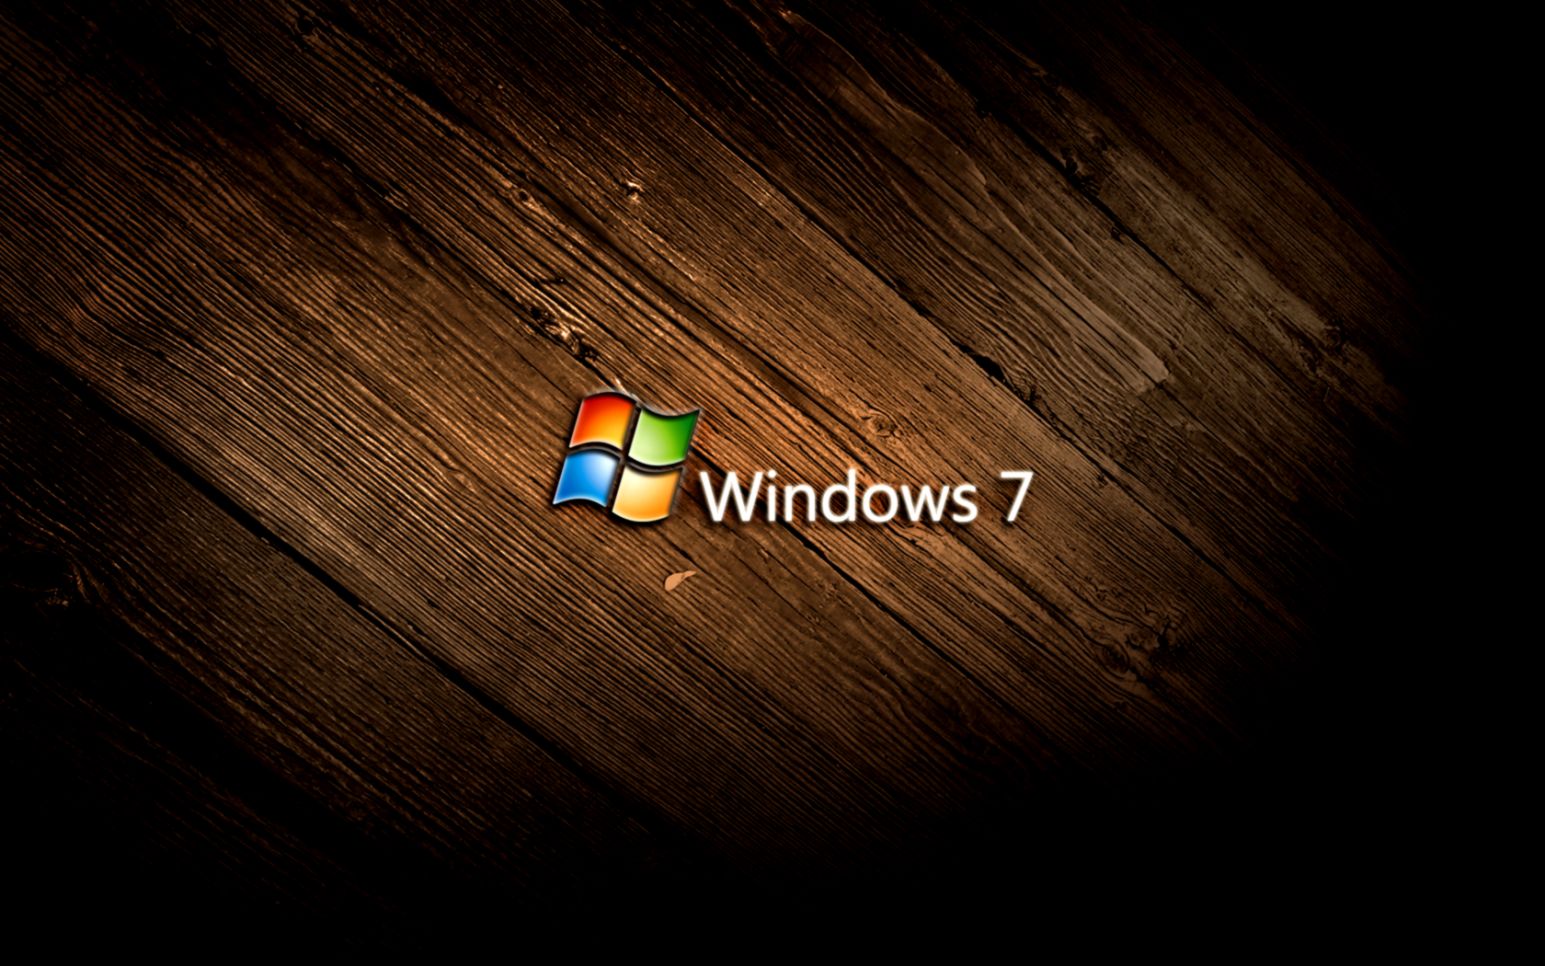 Windows 7 Wallpaper Hd